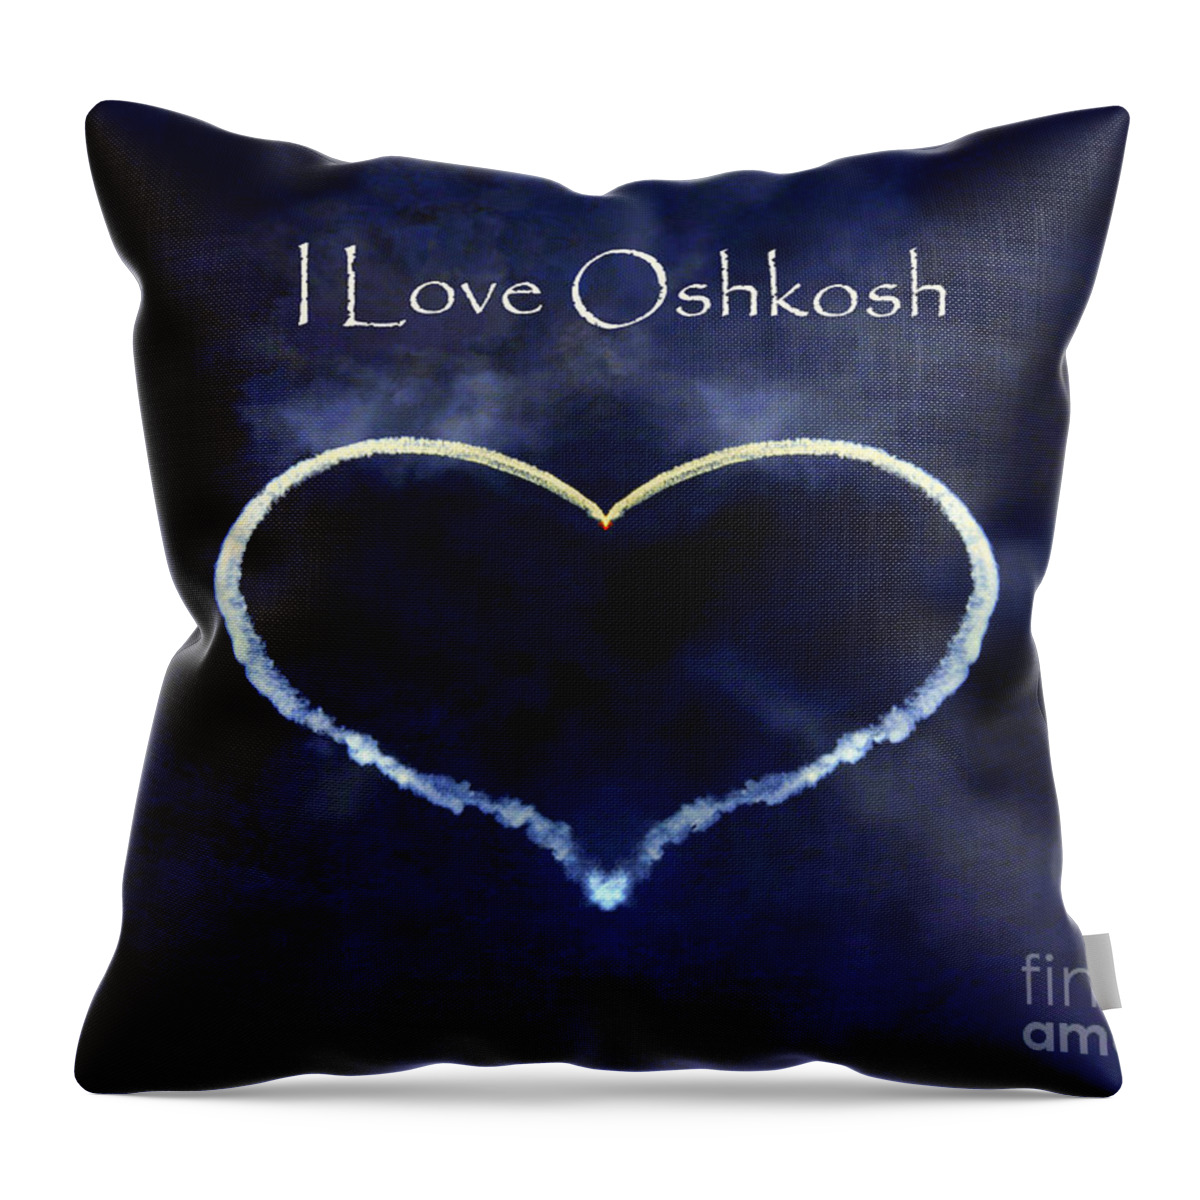 Oshkosh Throw Pillow featuring the photograph I Love Oshkosh. Aerobatic Flight Photo. by Ausra Huntington nee Paulauskaite